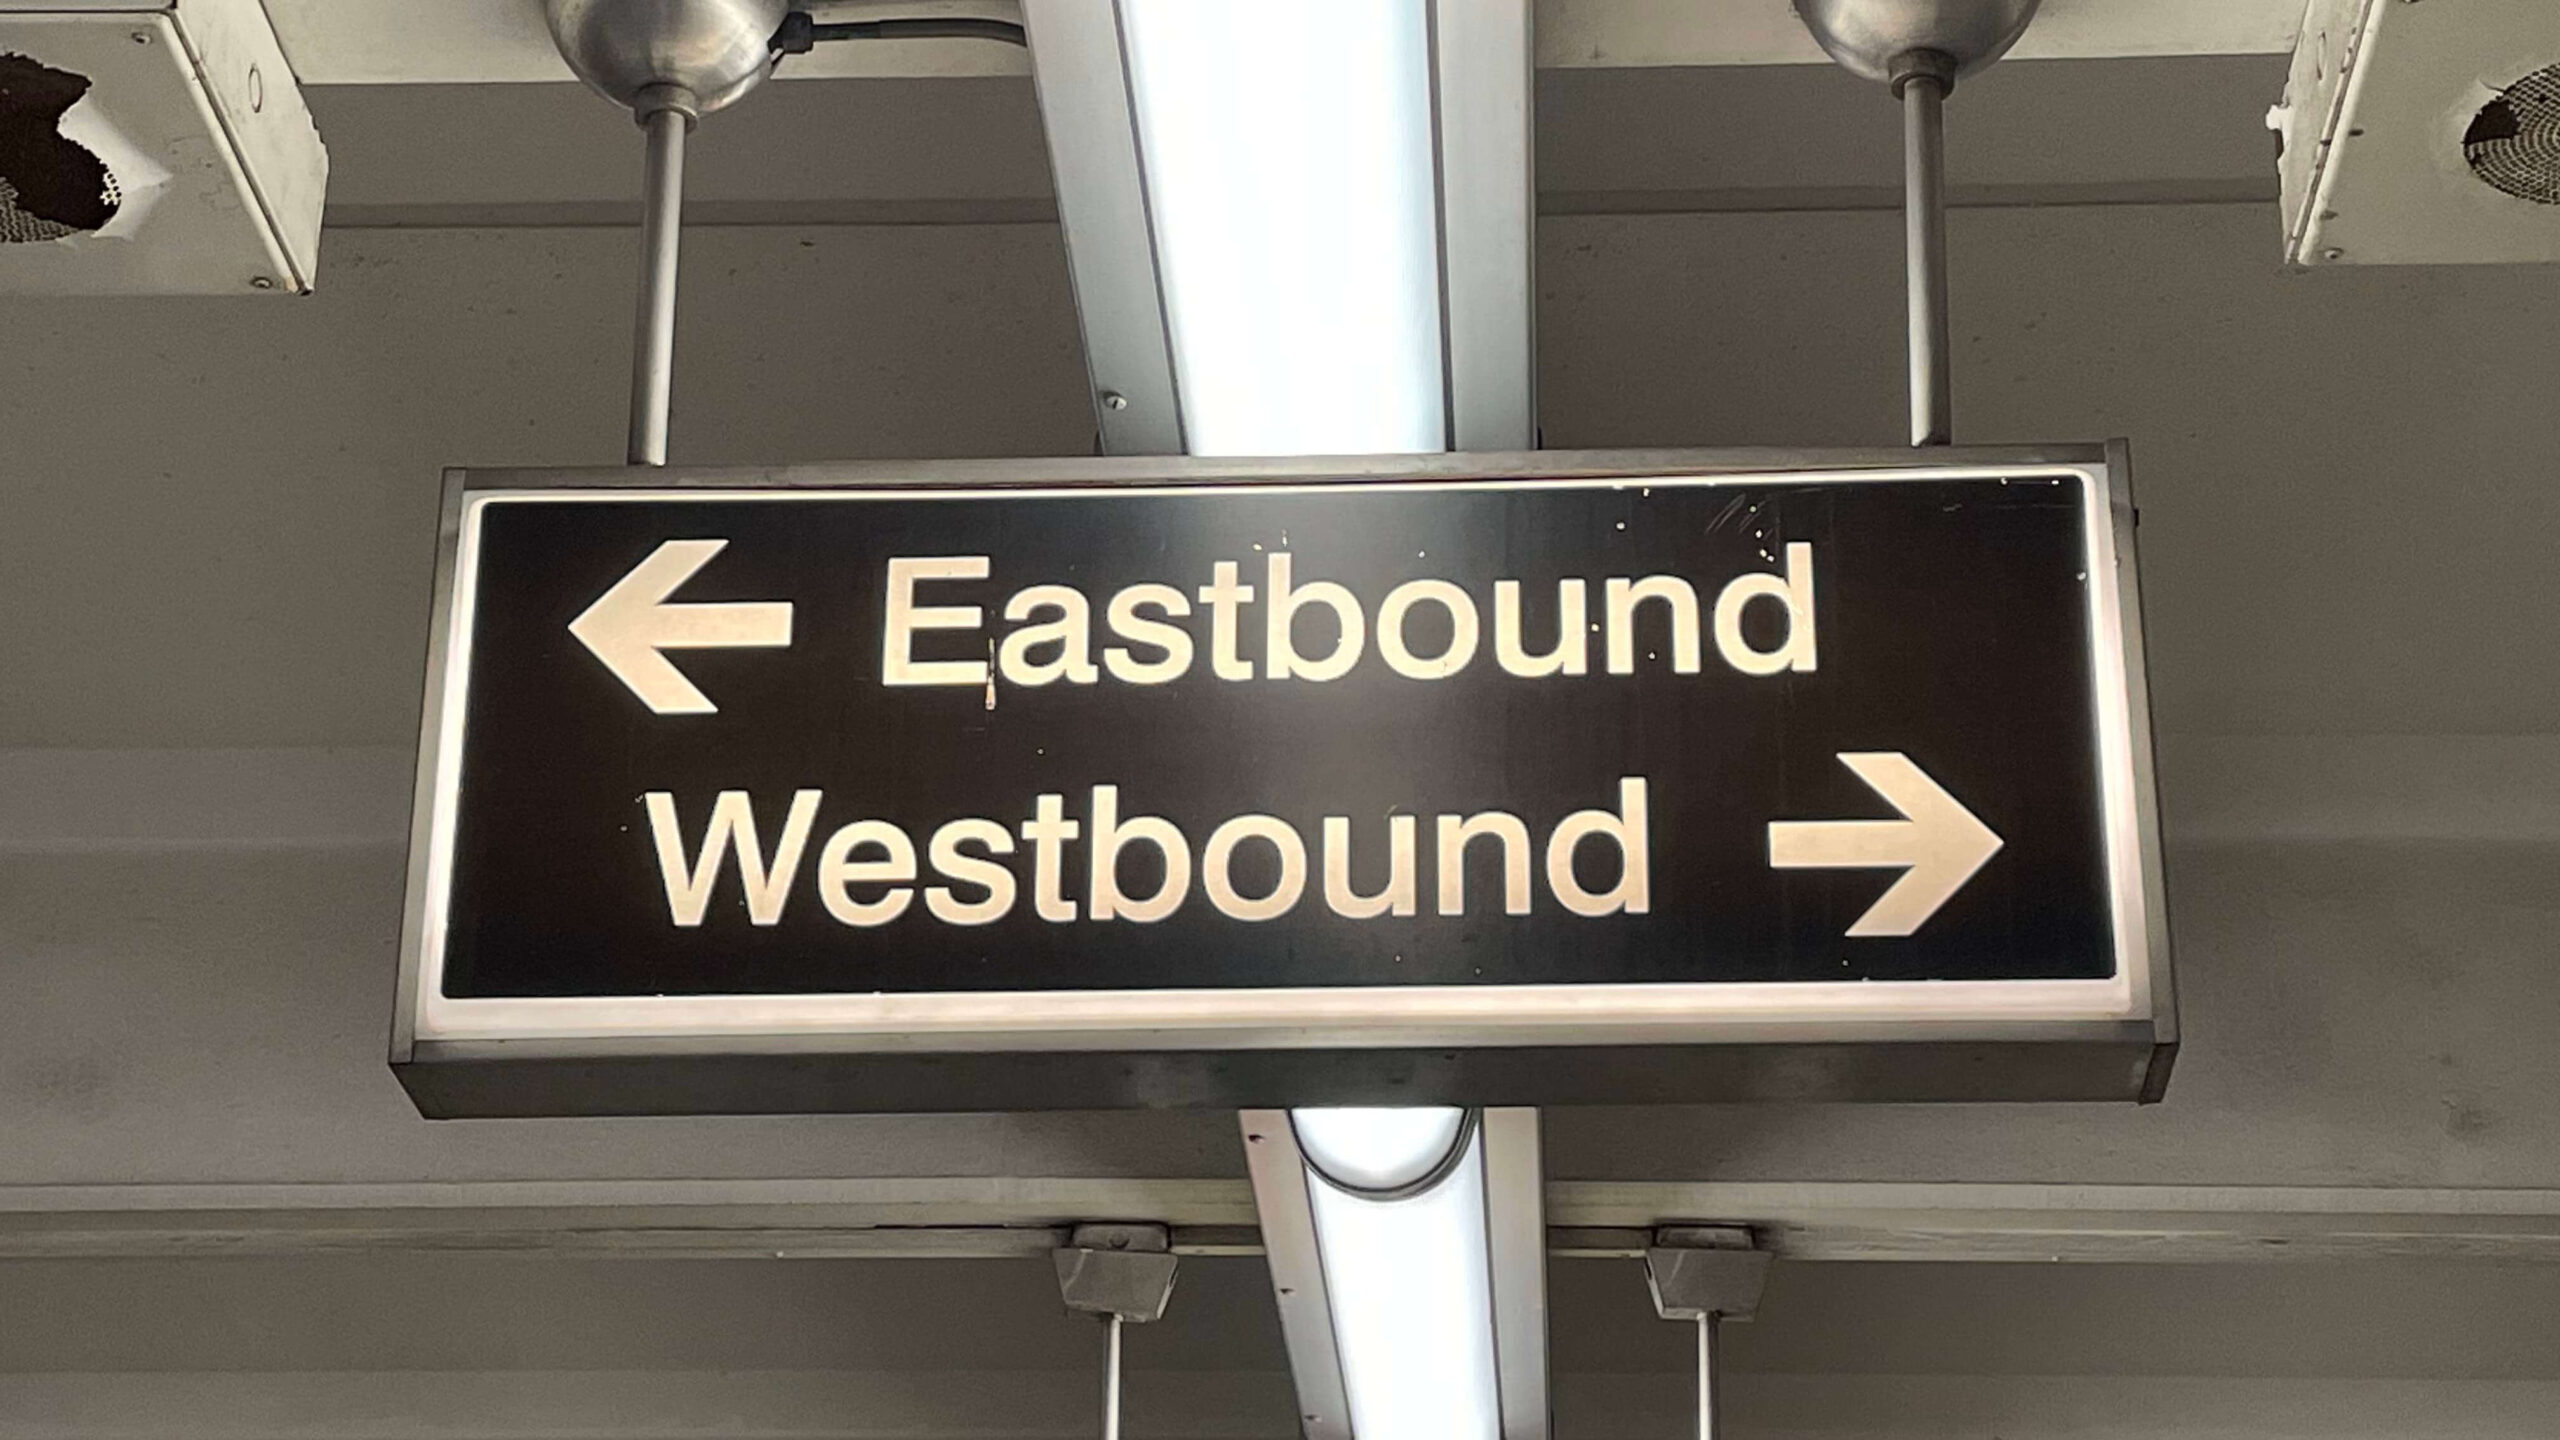 4 Ways to verify TTC Subway Direction